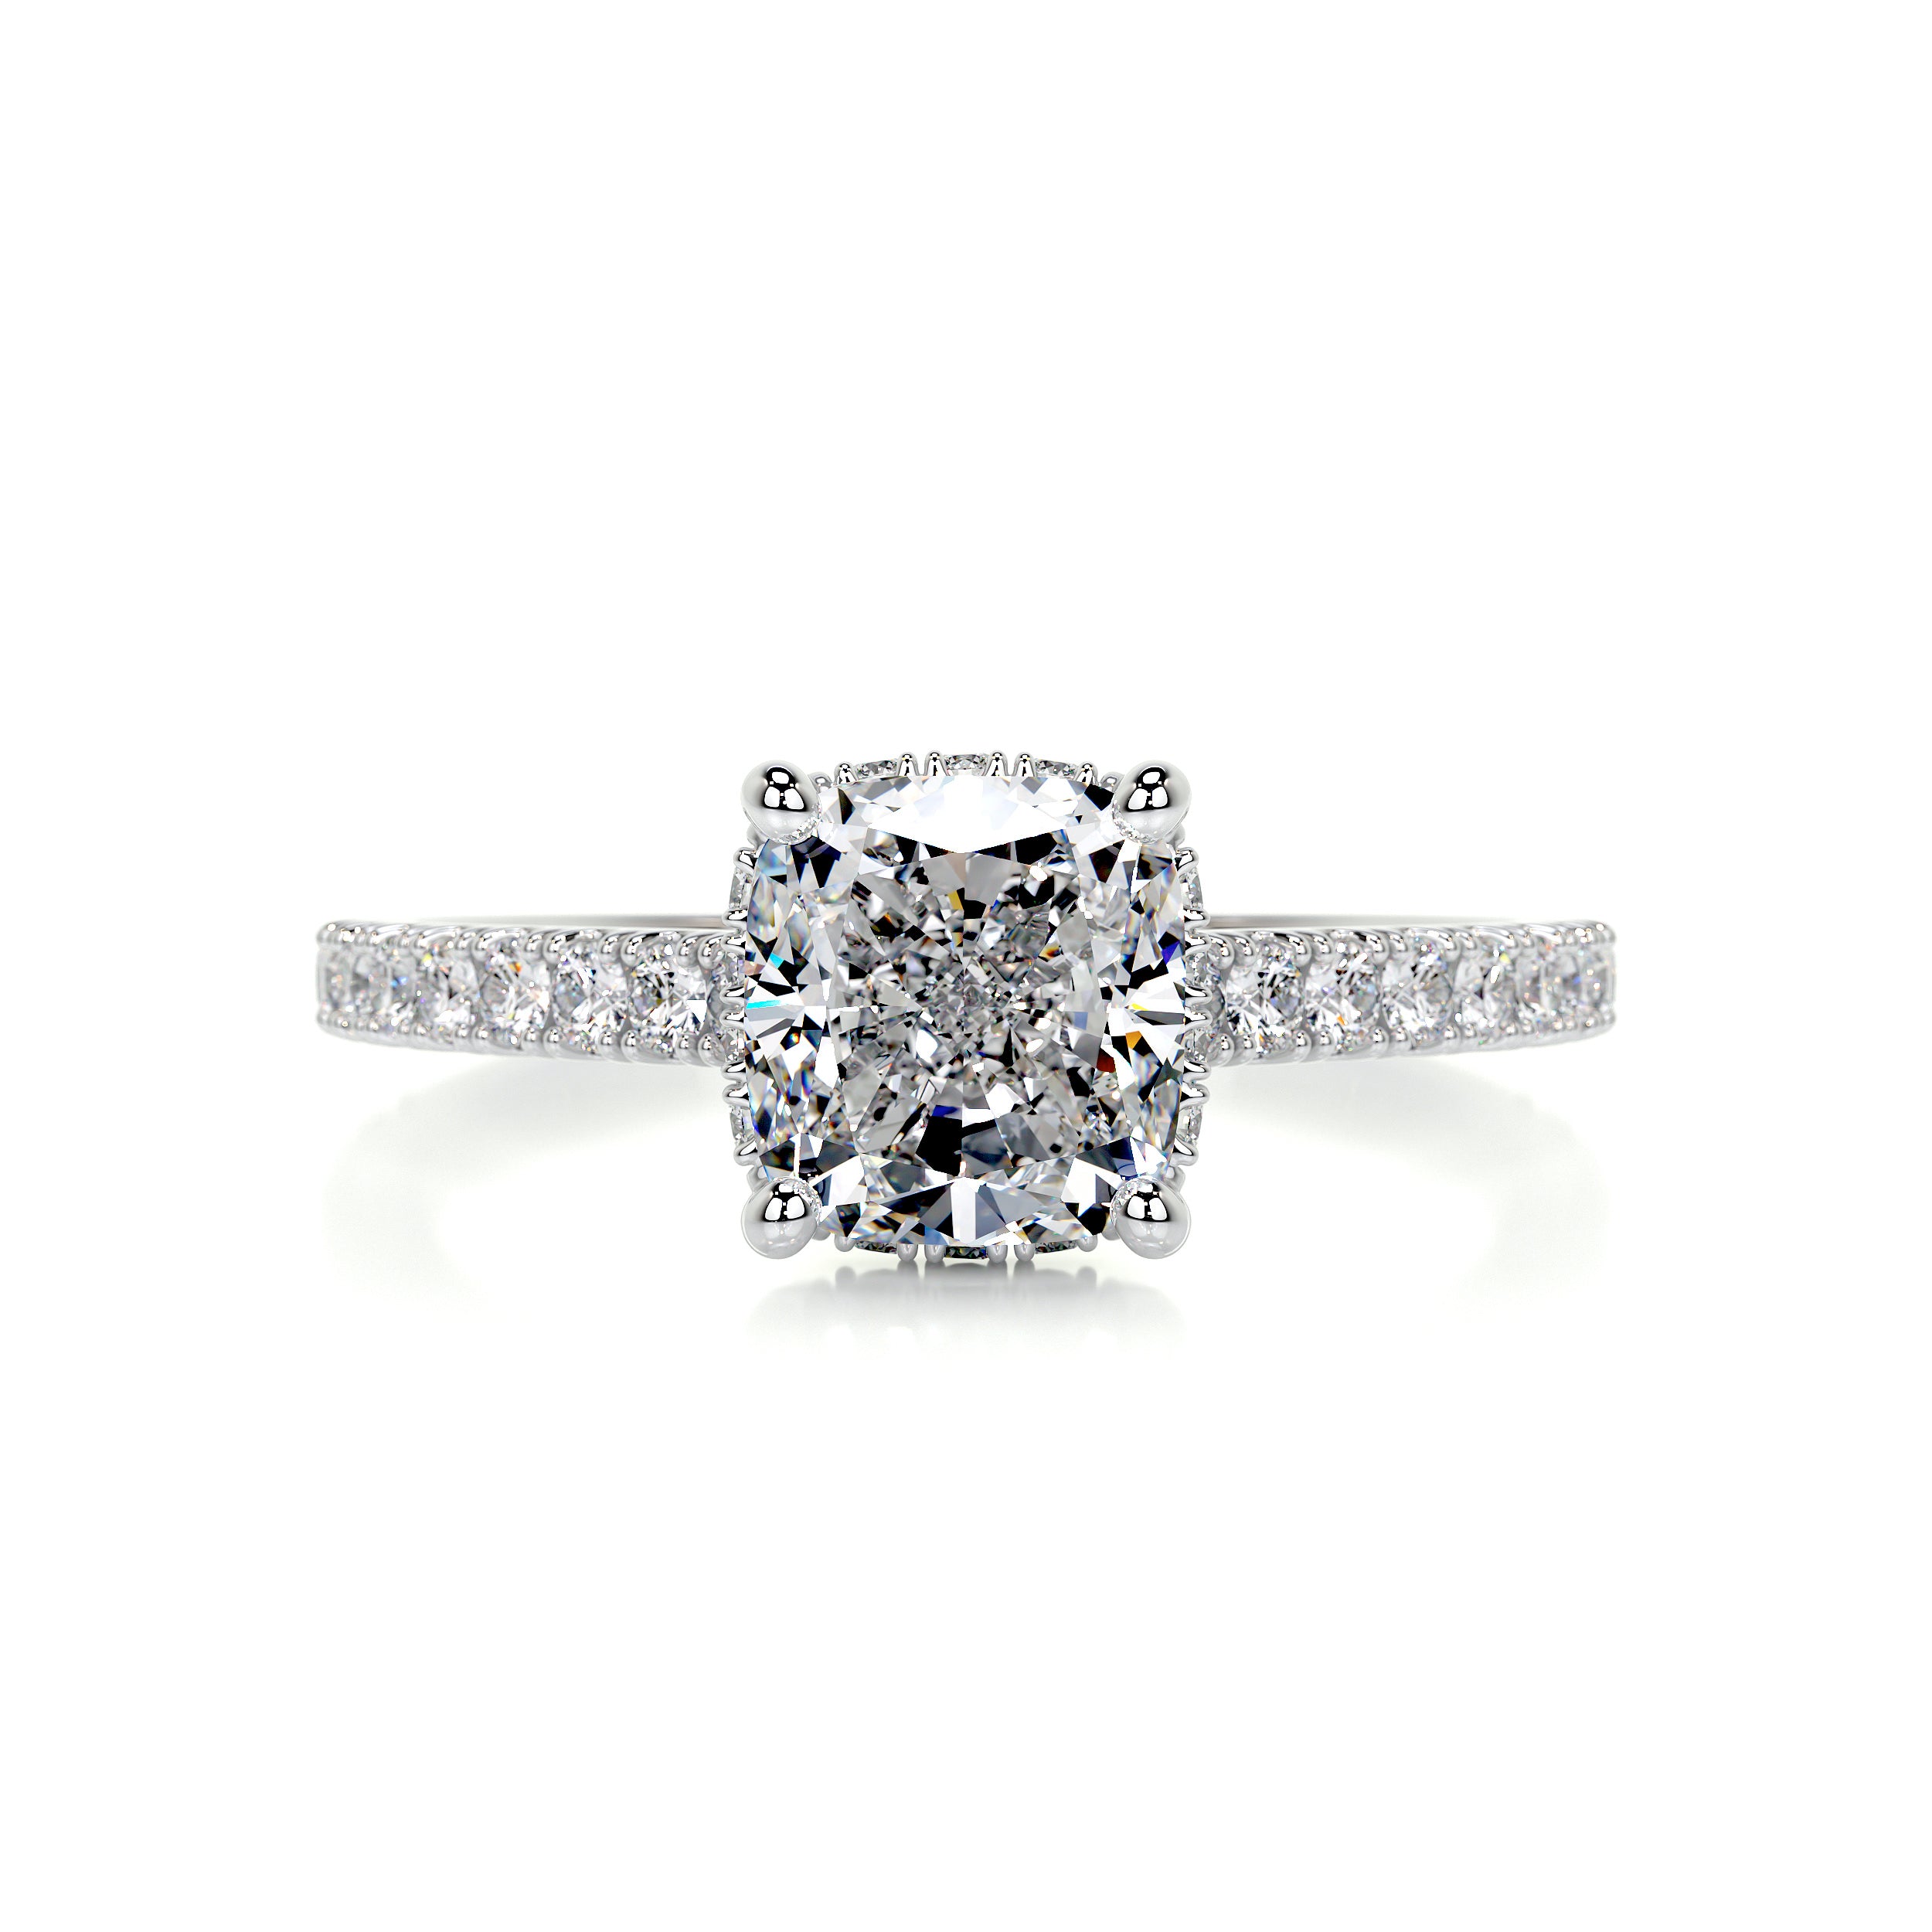 Cassandra Diamond Engagement Ring   (2 Carat) -14K White Gold